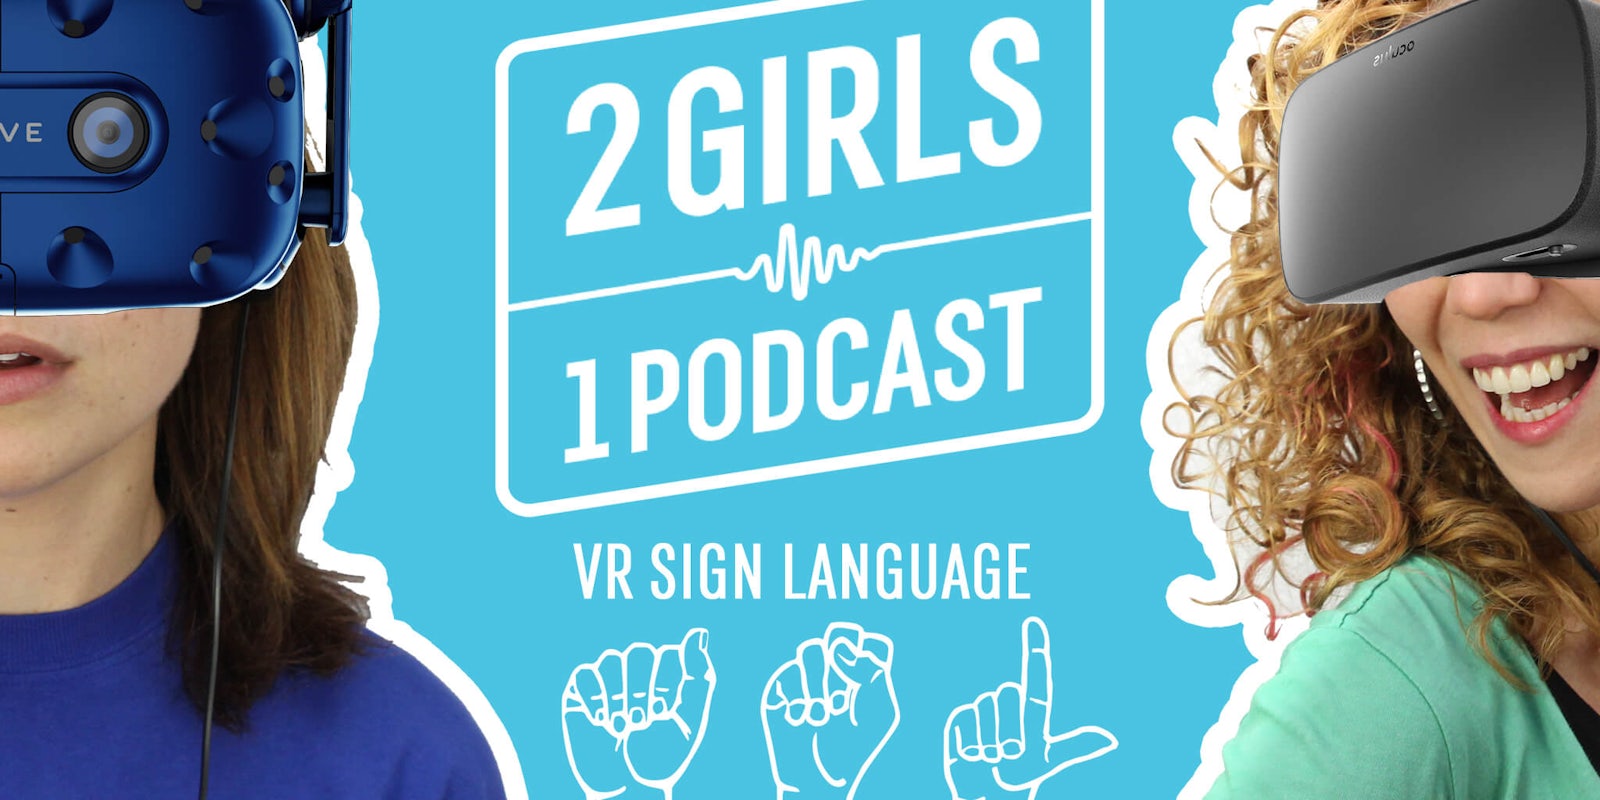 2 Girls 1 Podcast VR SIGN LANGUAGE